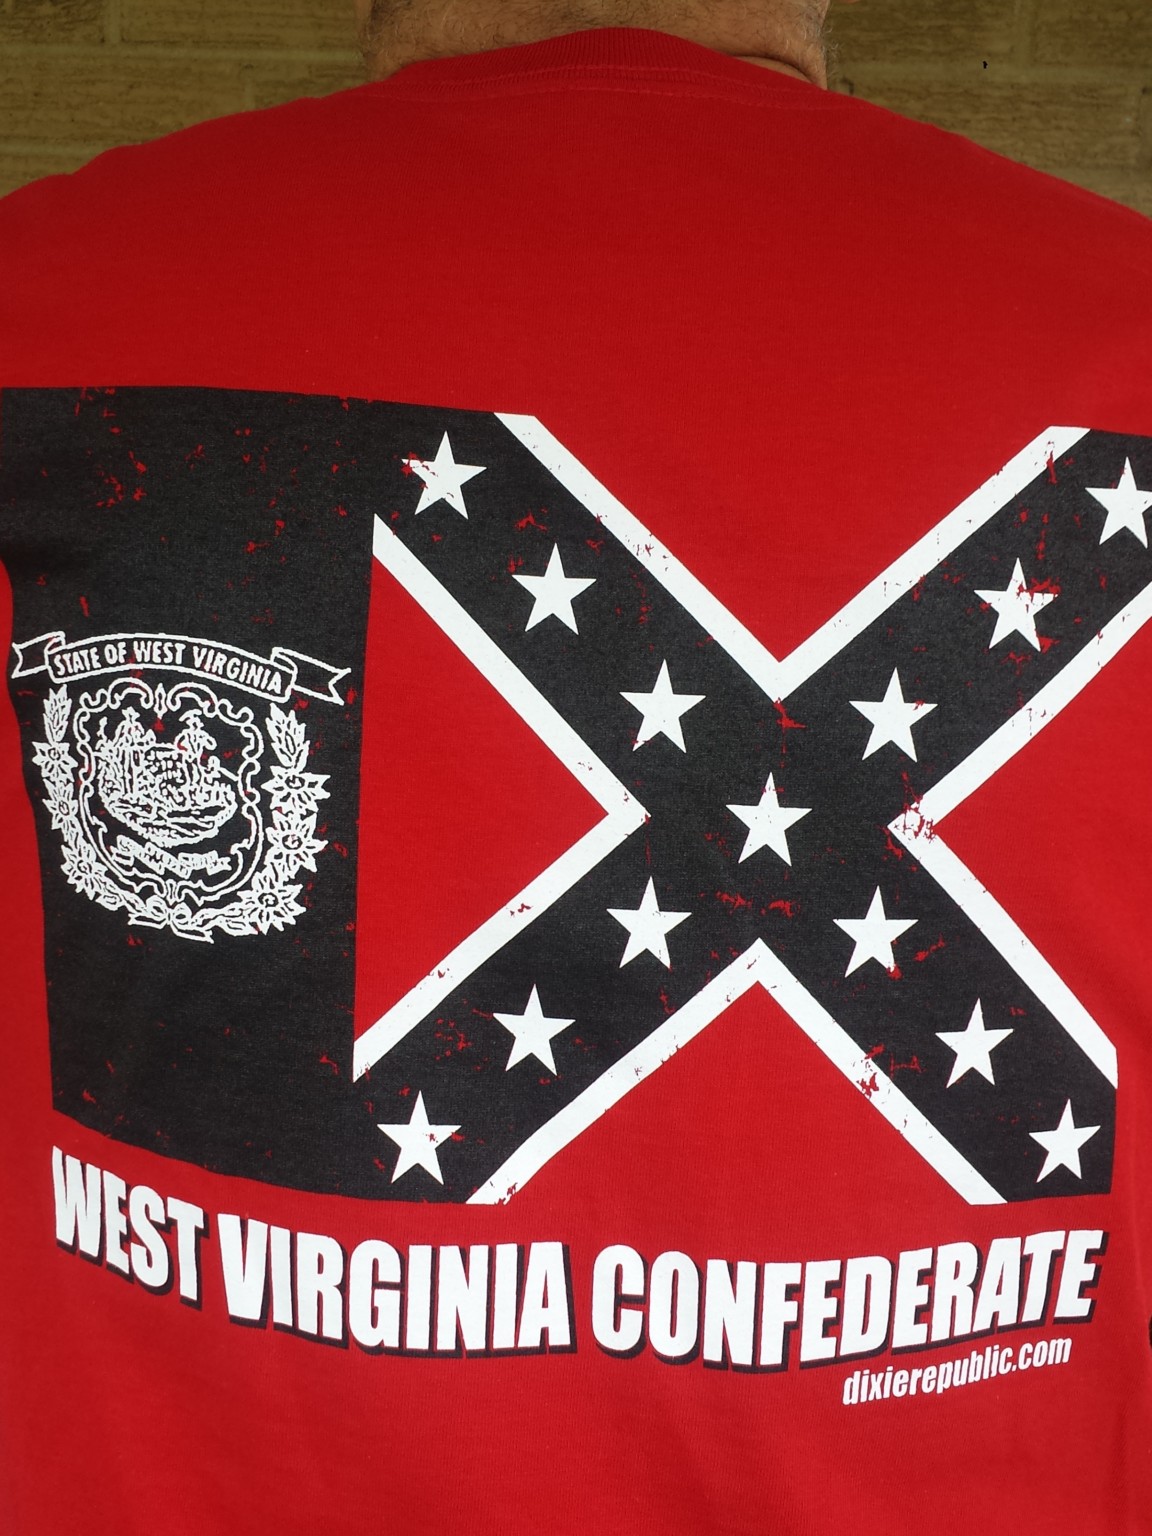 West Virginia Confederate Tee Shirt.